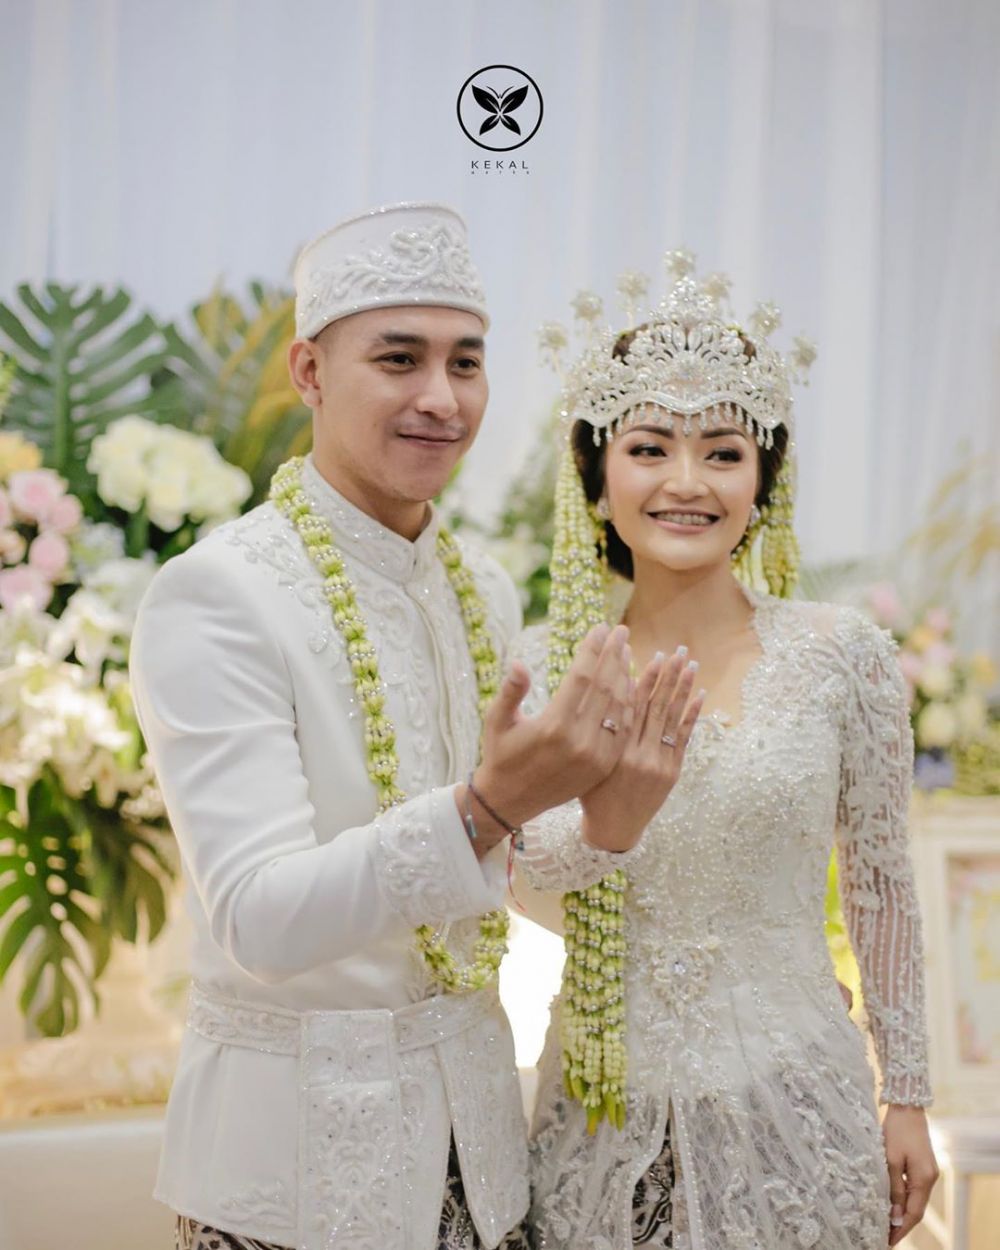 Ini alasan Siti Badriah memilih akad nikah sederhana di rumah